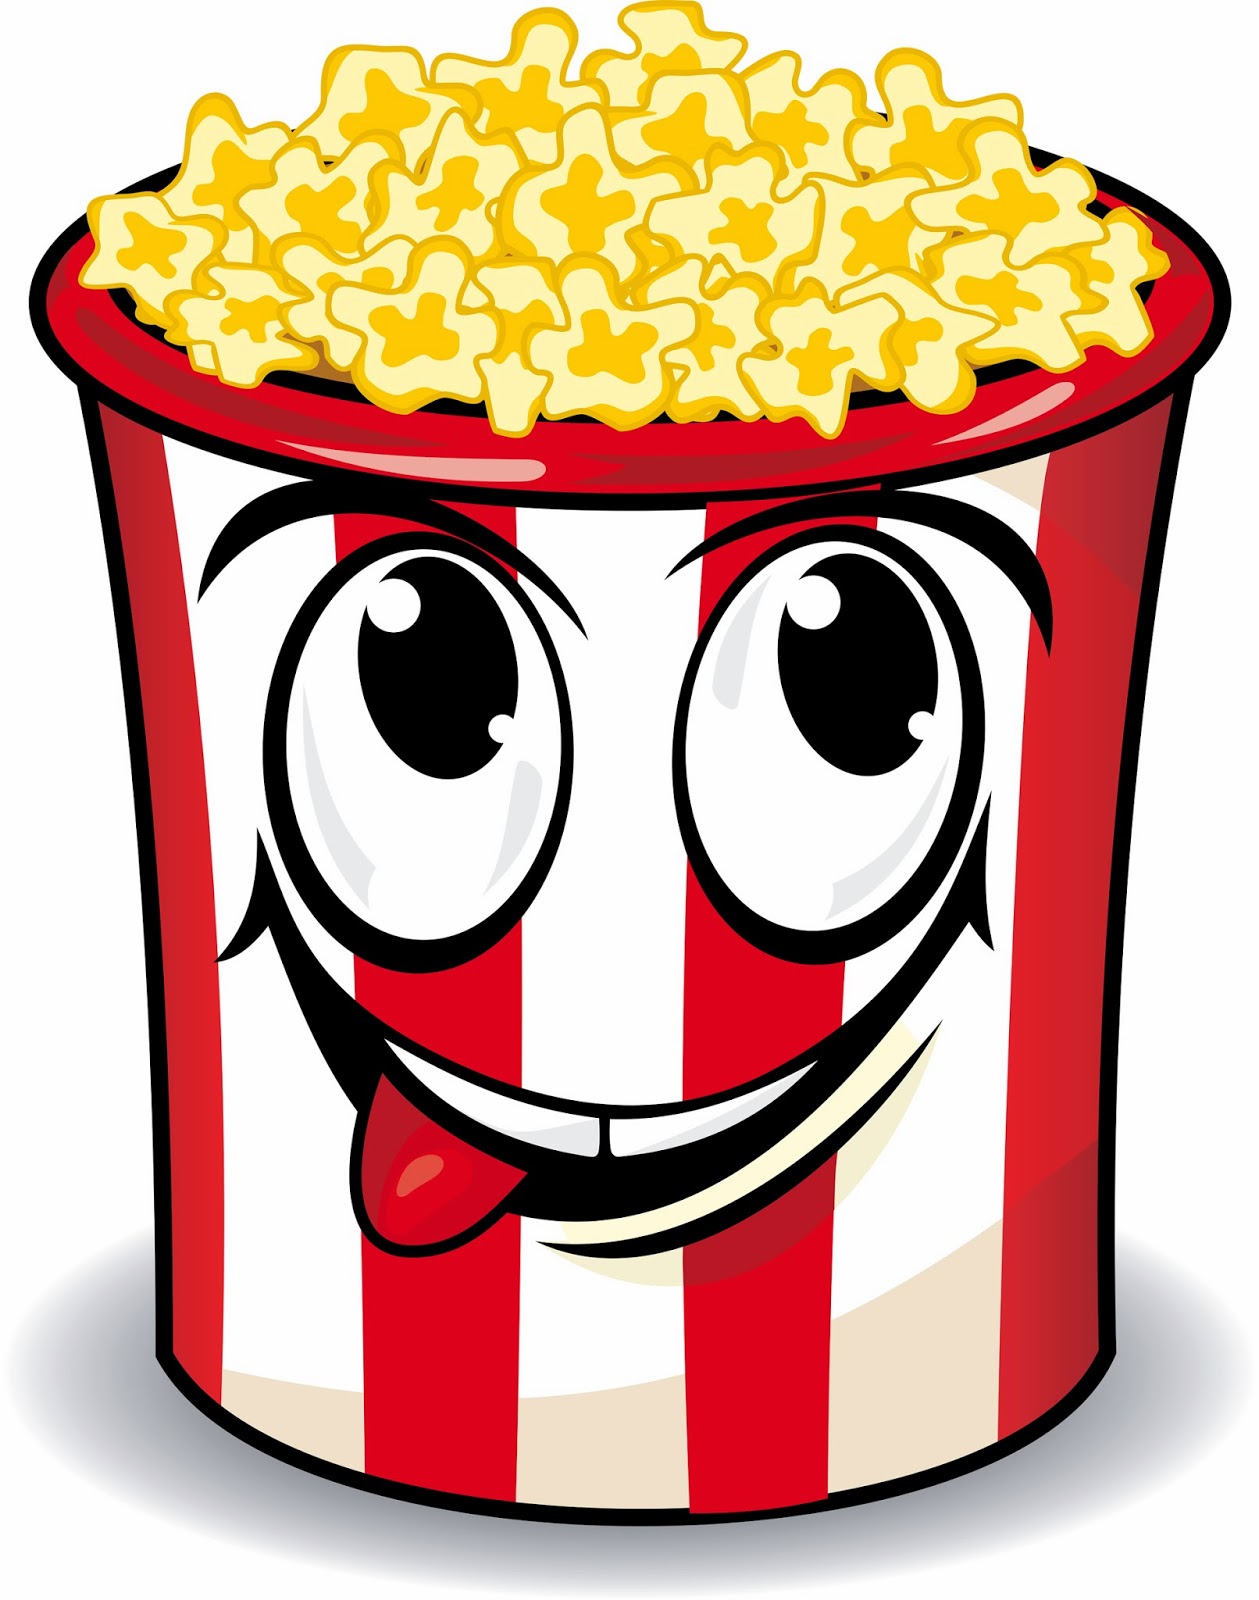 Popcorn clipart free clip art images image 2